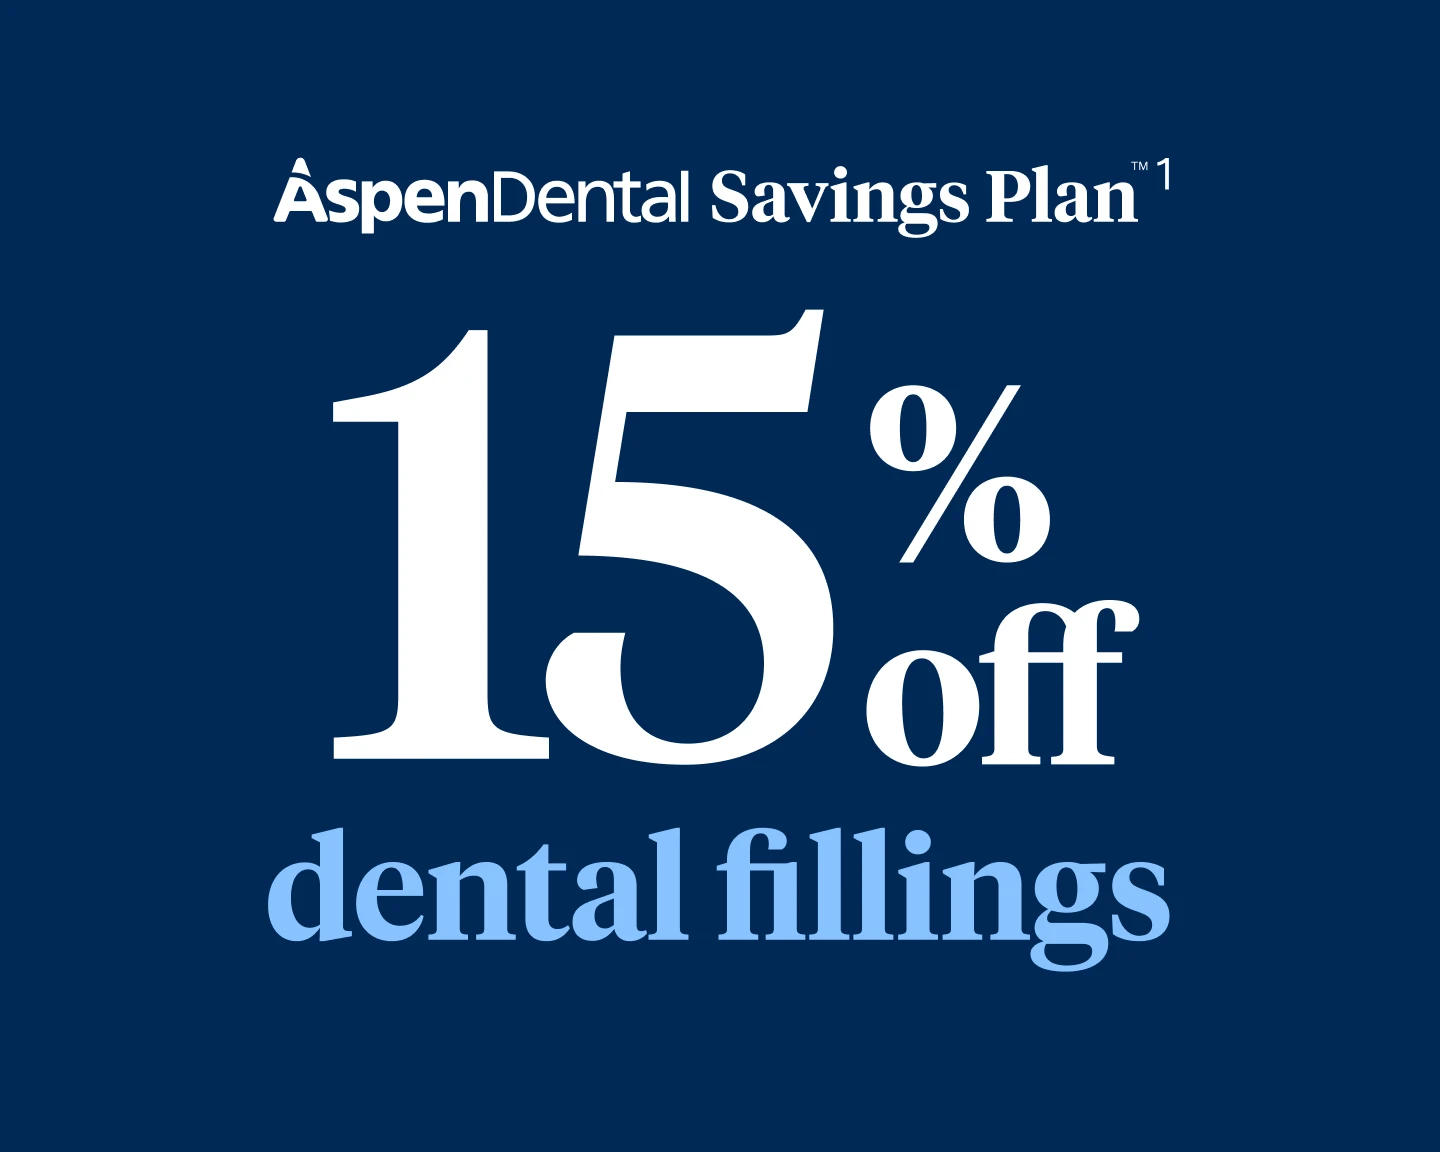 Aspen Dental Savings Plan: 15% off dental fillings. 